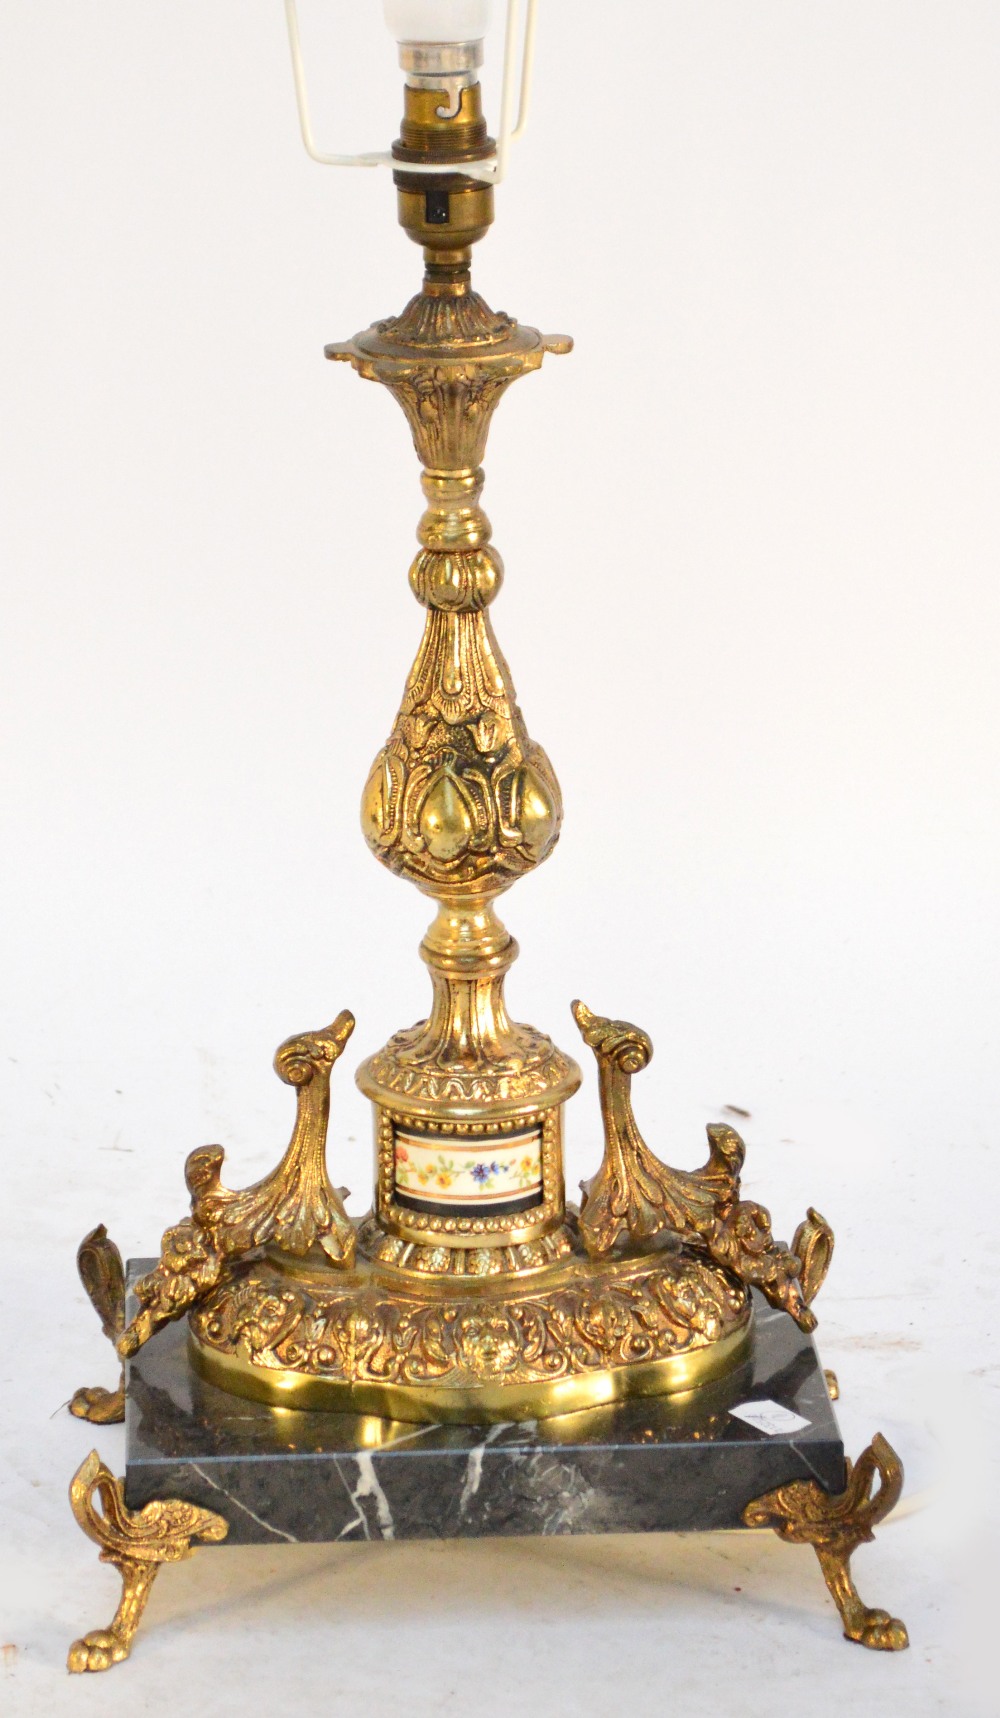 An ornate gilt metal lamp.